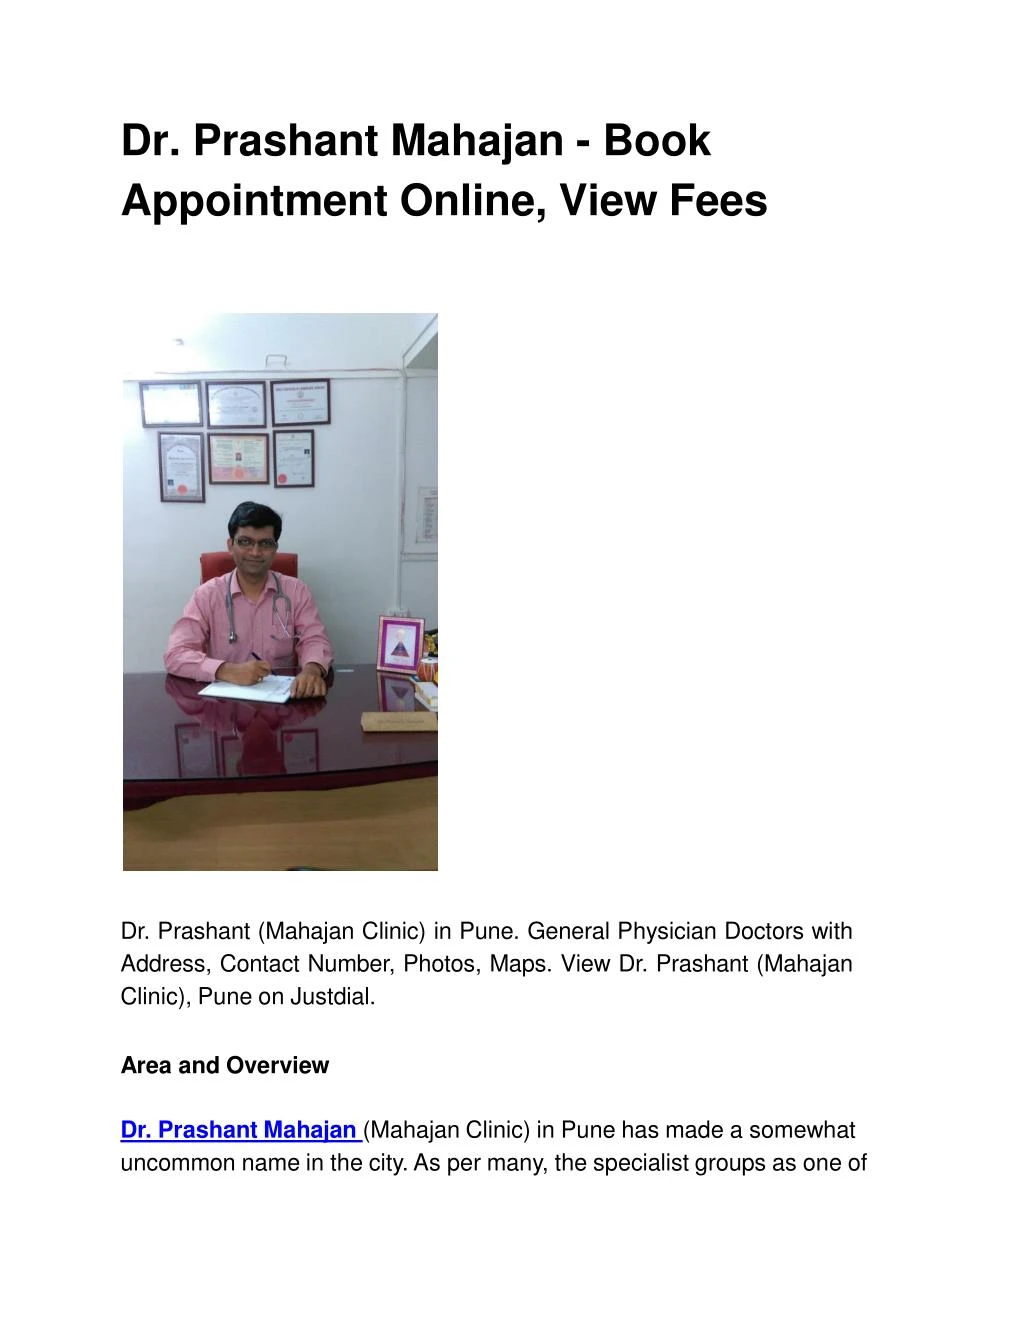 dr prashant mahajan book appointment online view fees